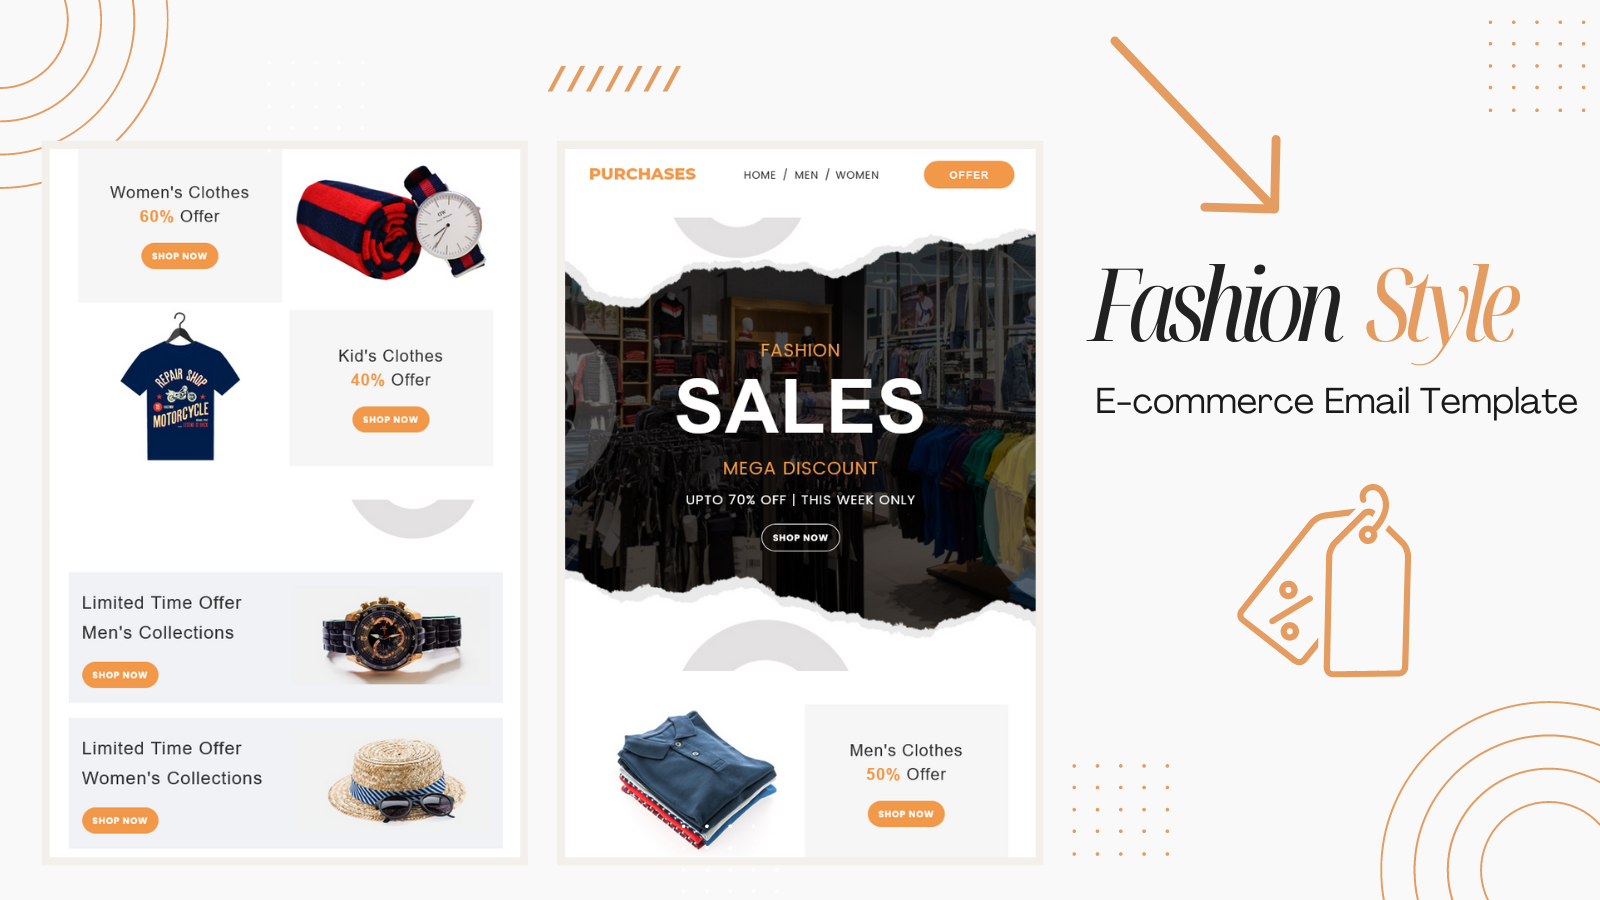 Fashion Sale – E-commerce Email Template